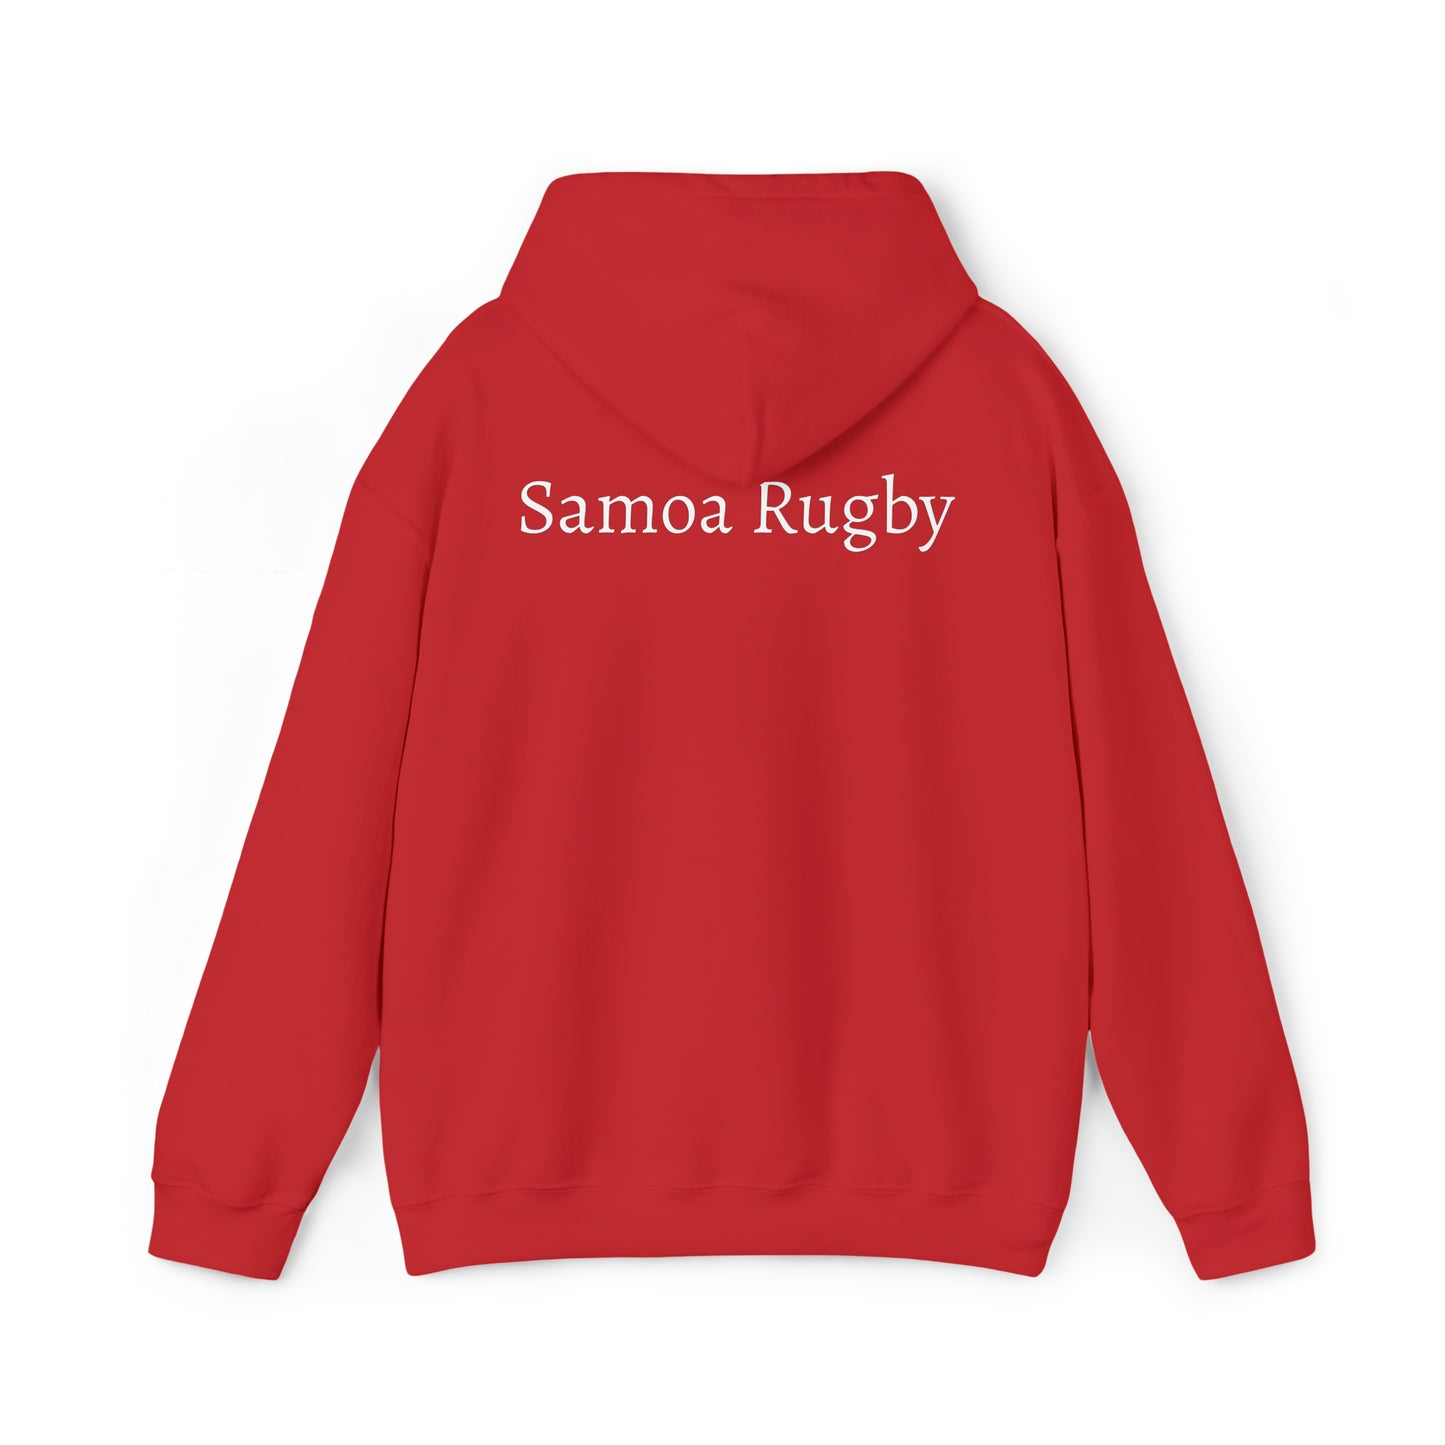 Post Match Samoa - dark hoodies